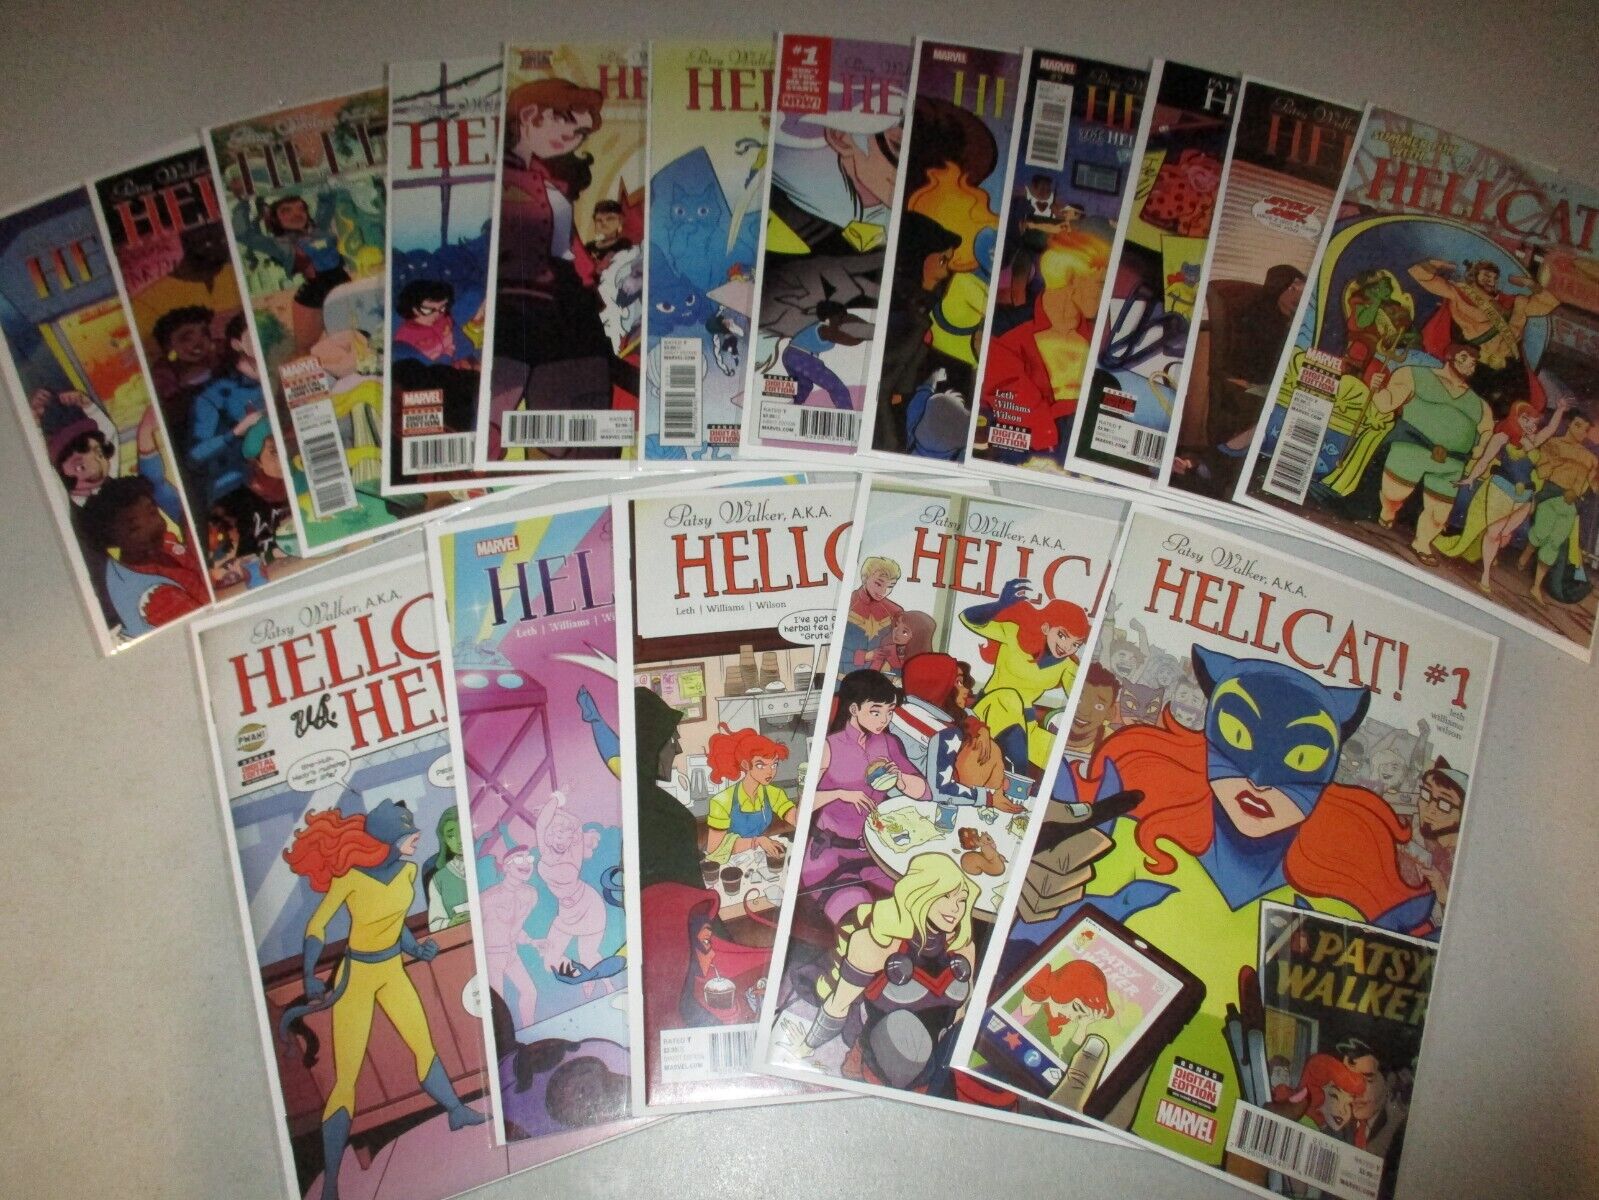 Patsy Walker aka Hellcat #1-17 (Complete 2016 series) Lot set run 